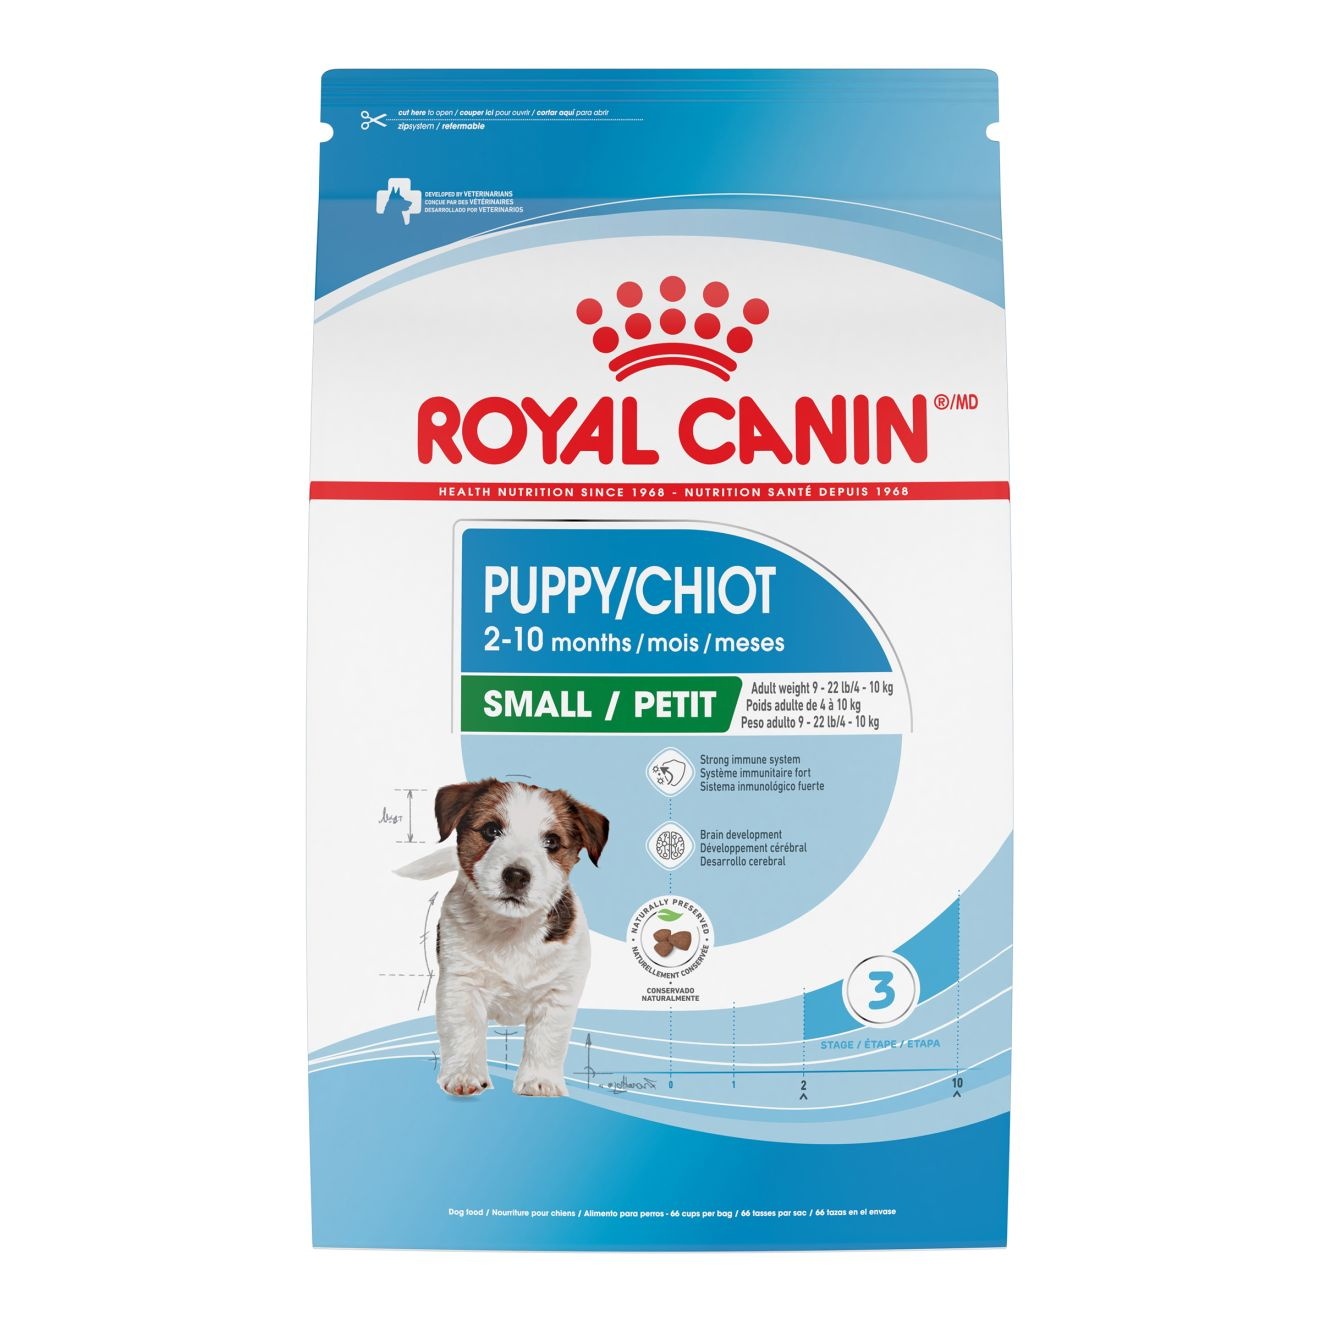 Royal Canin Mini Puppy Food